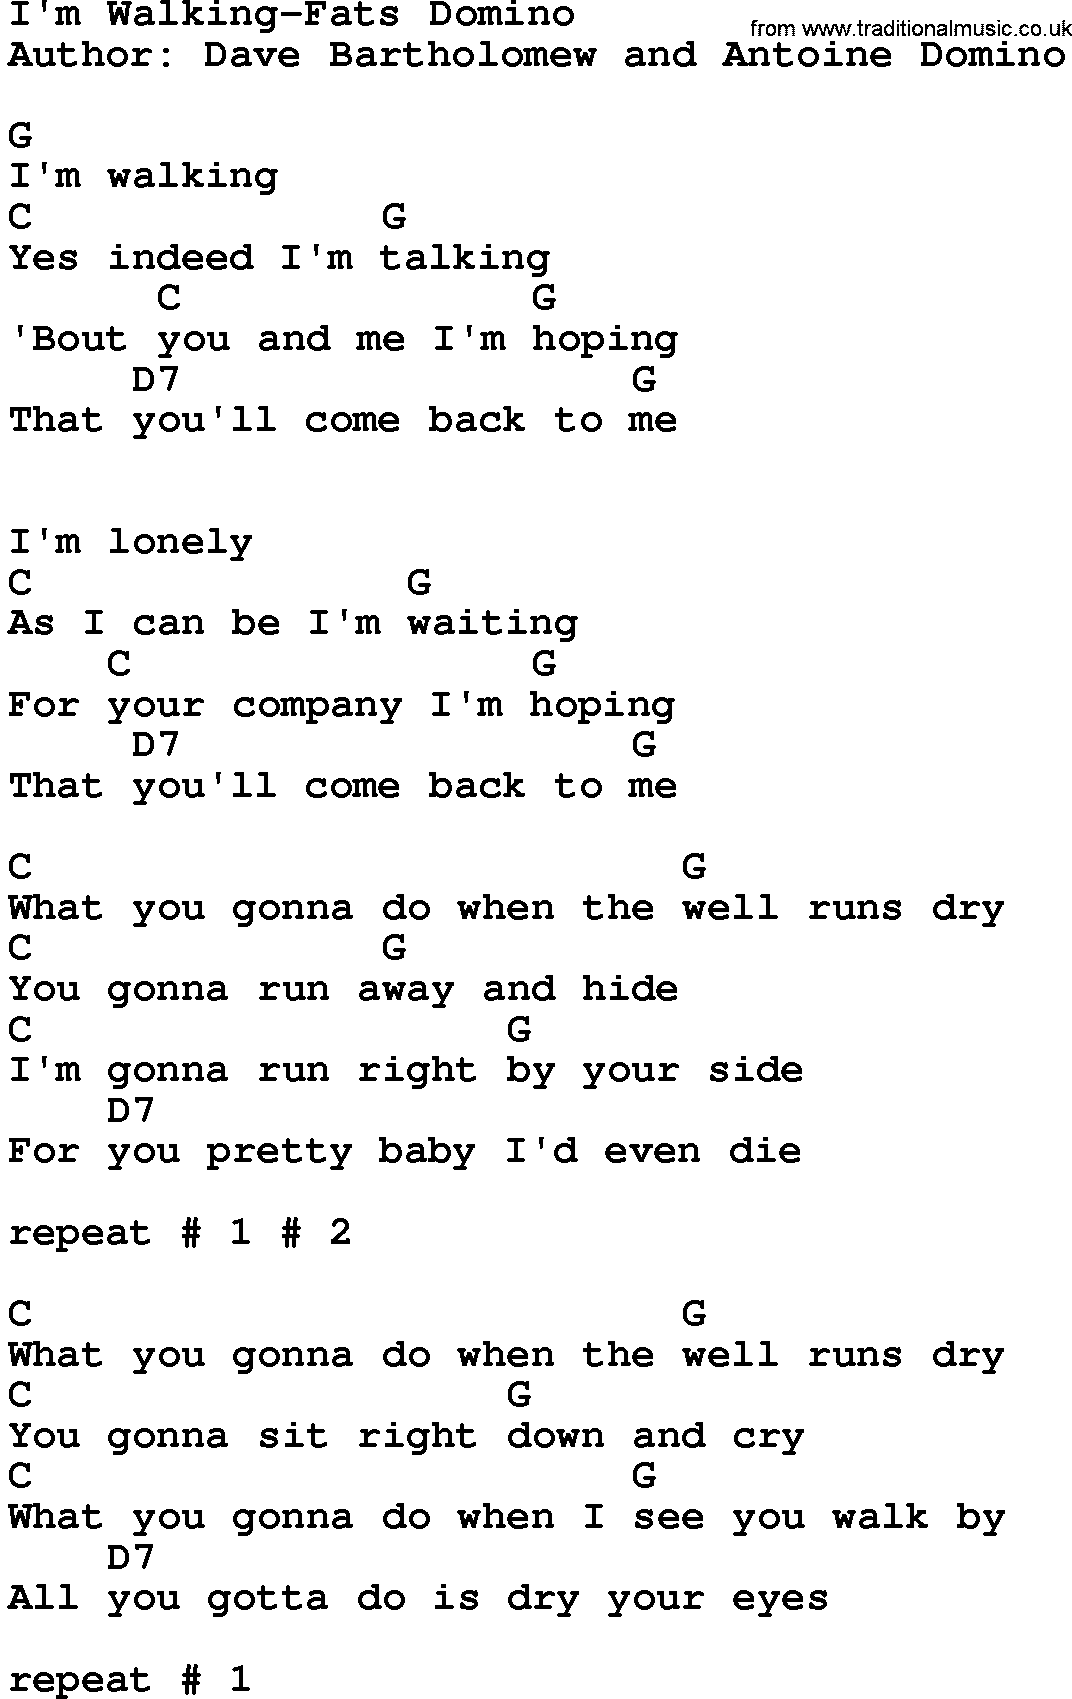 Country music song: I'm Walking-Fats Domino lyrics and chords